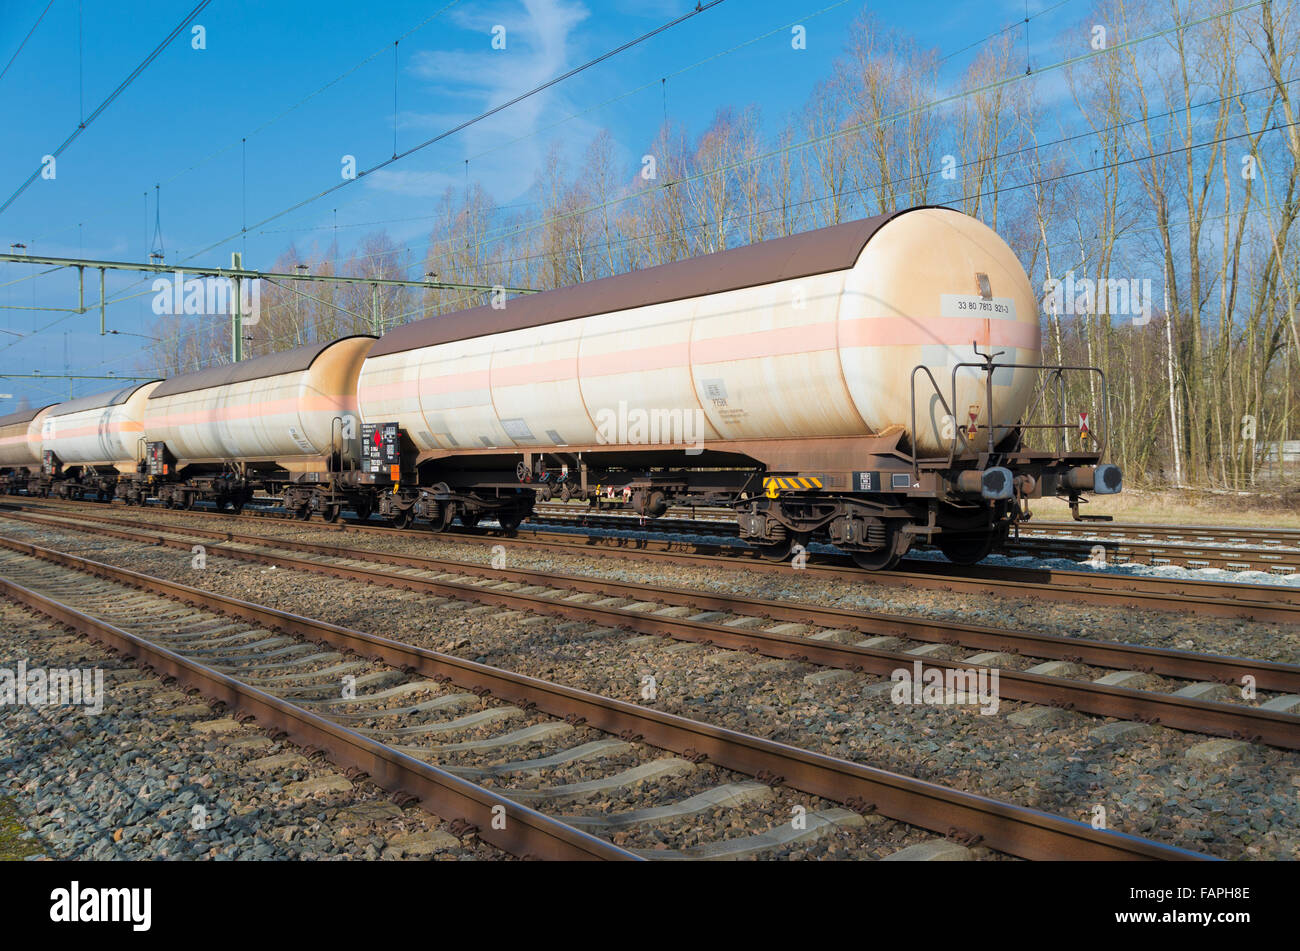 train waggon for liquids like petrol or oil Stock Photo